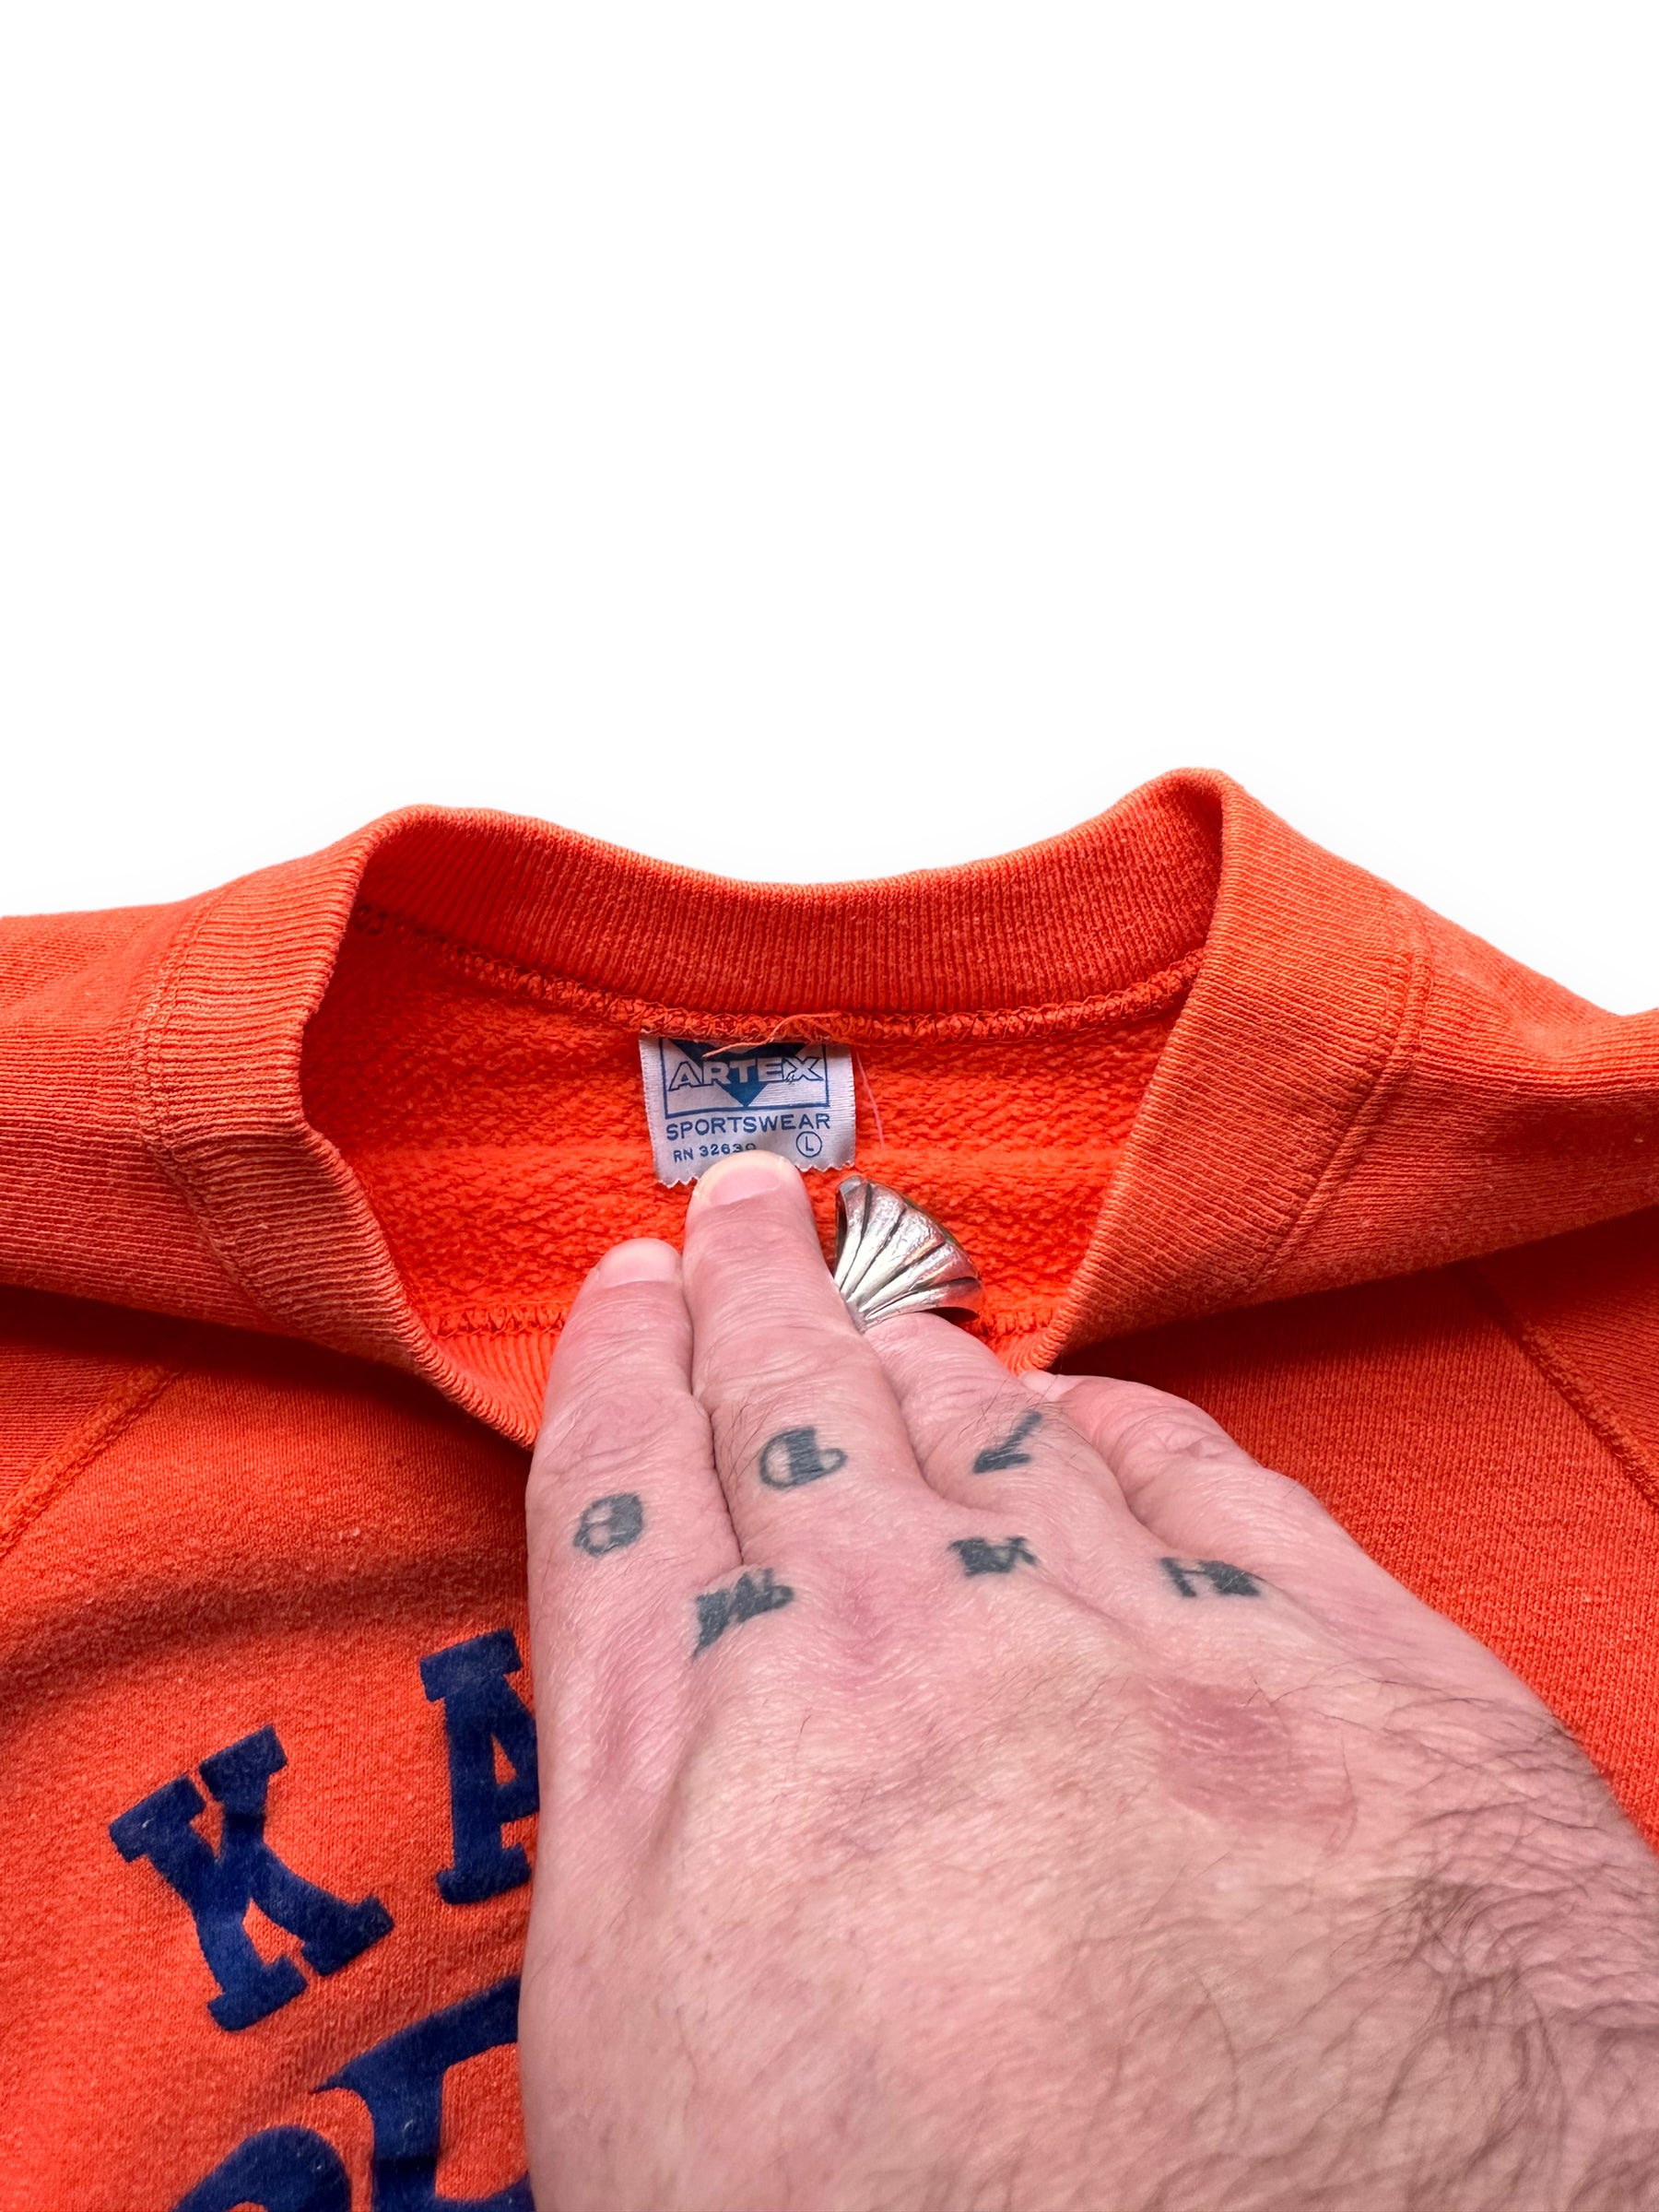 Tag View on Vintage Artex Kansas University 1969 Orange Bowl Short Sleeve Crewneck Sweatshirt SZ L | Barn Owl Vintage Clothing | Seattle Vintage Sweatshirts